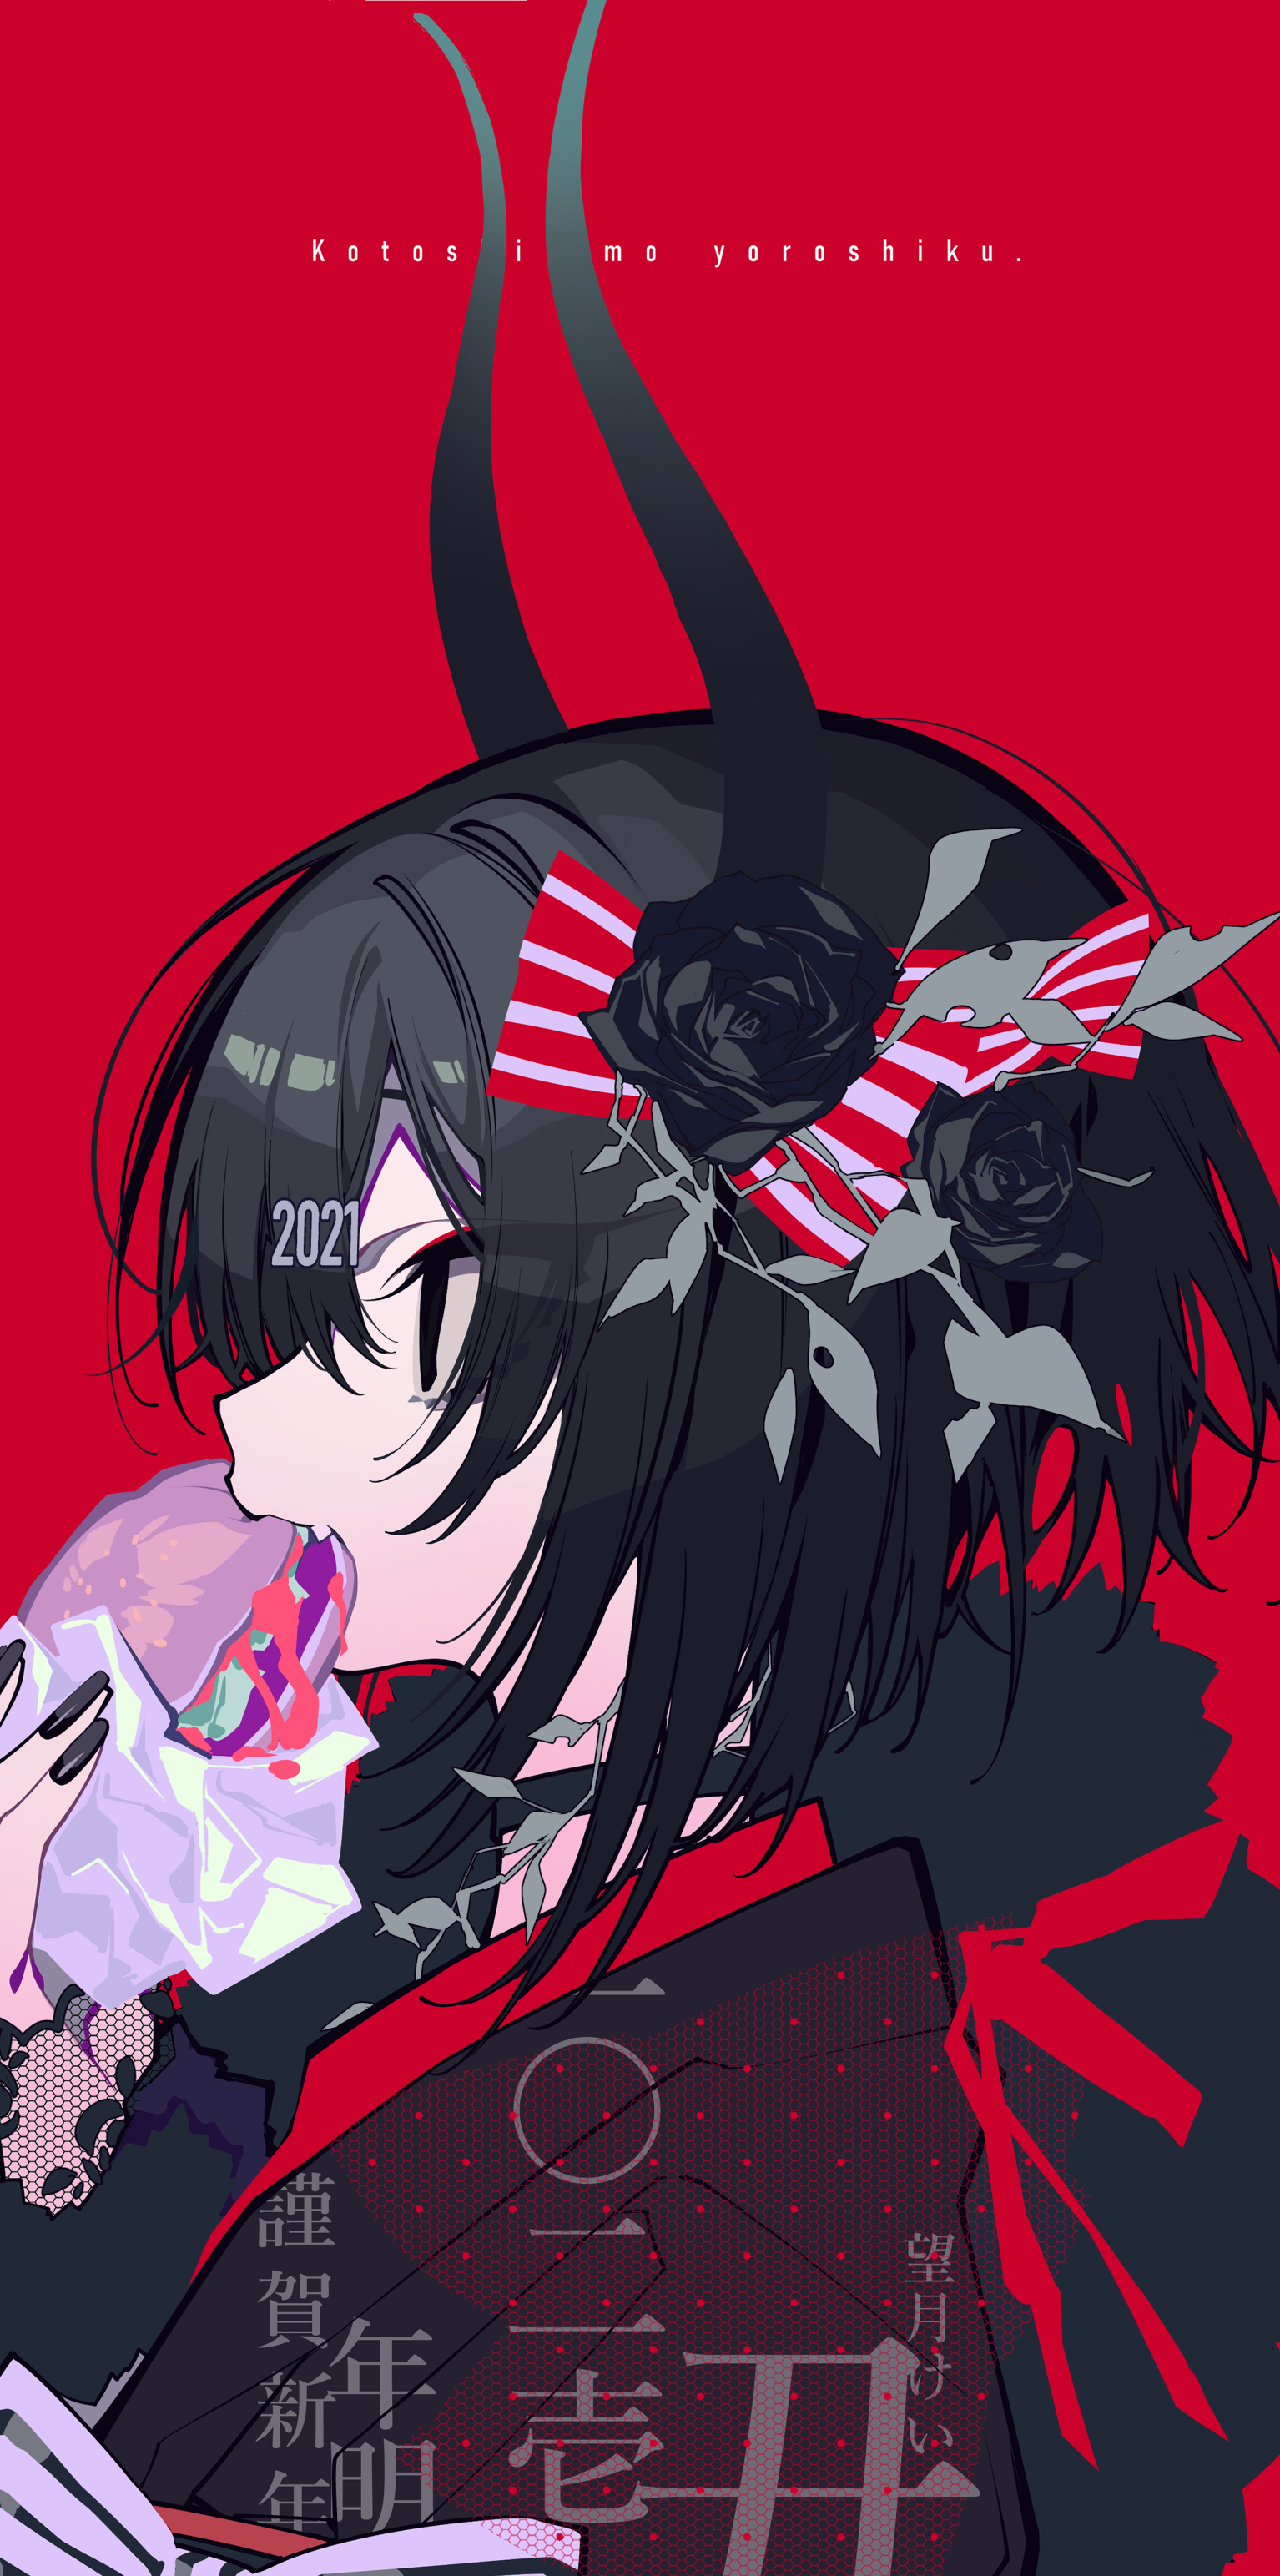 Anime Anime Girls Digital Art Artwork 2D Portrait Display Vertical Red Background 2021 Year Dark Hai 1534x3087